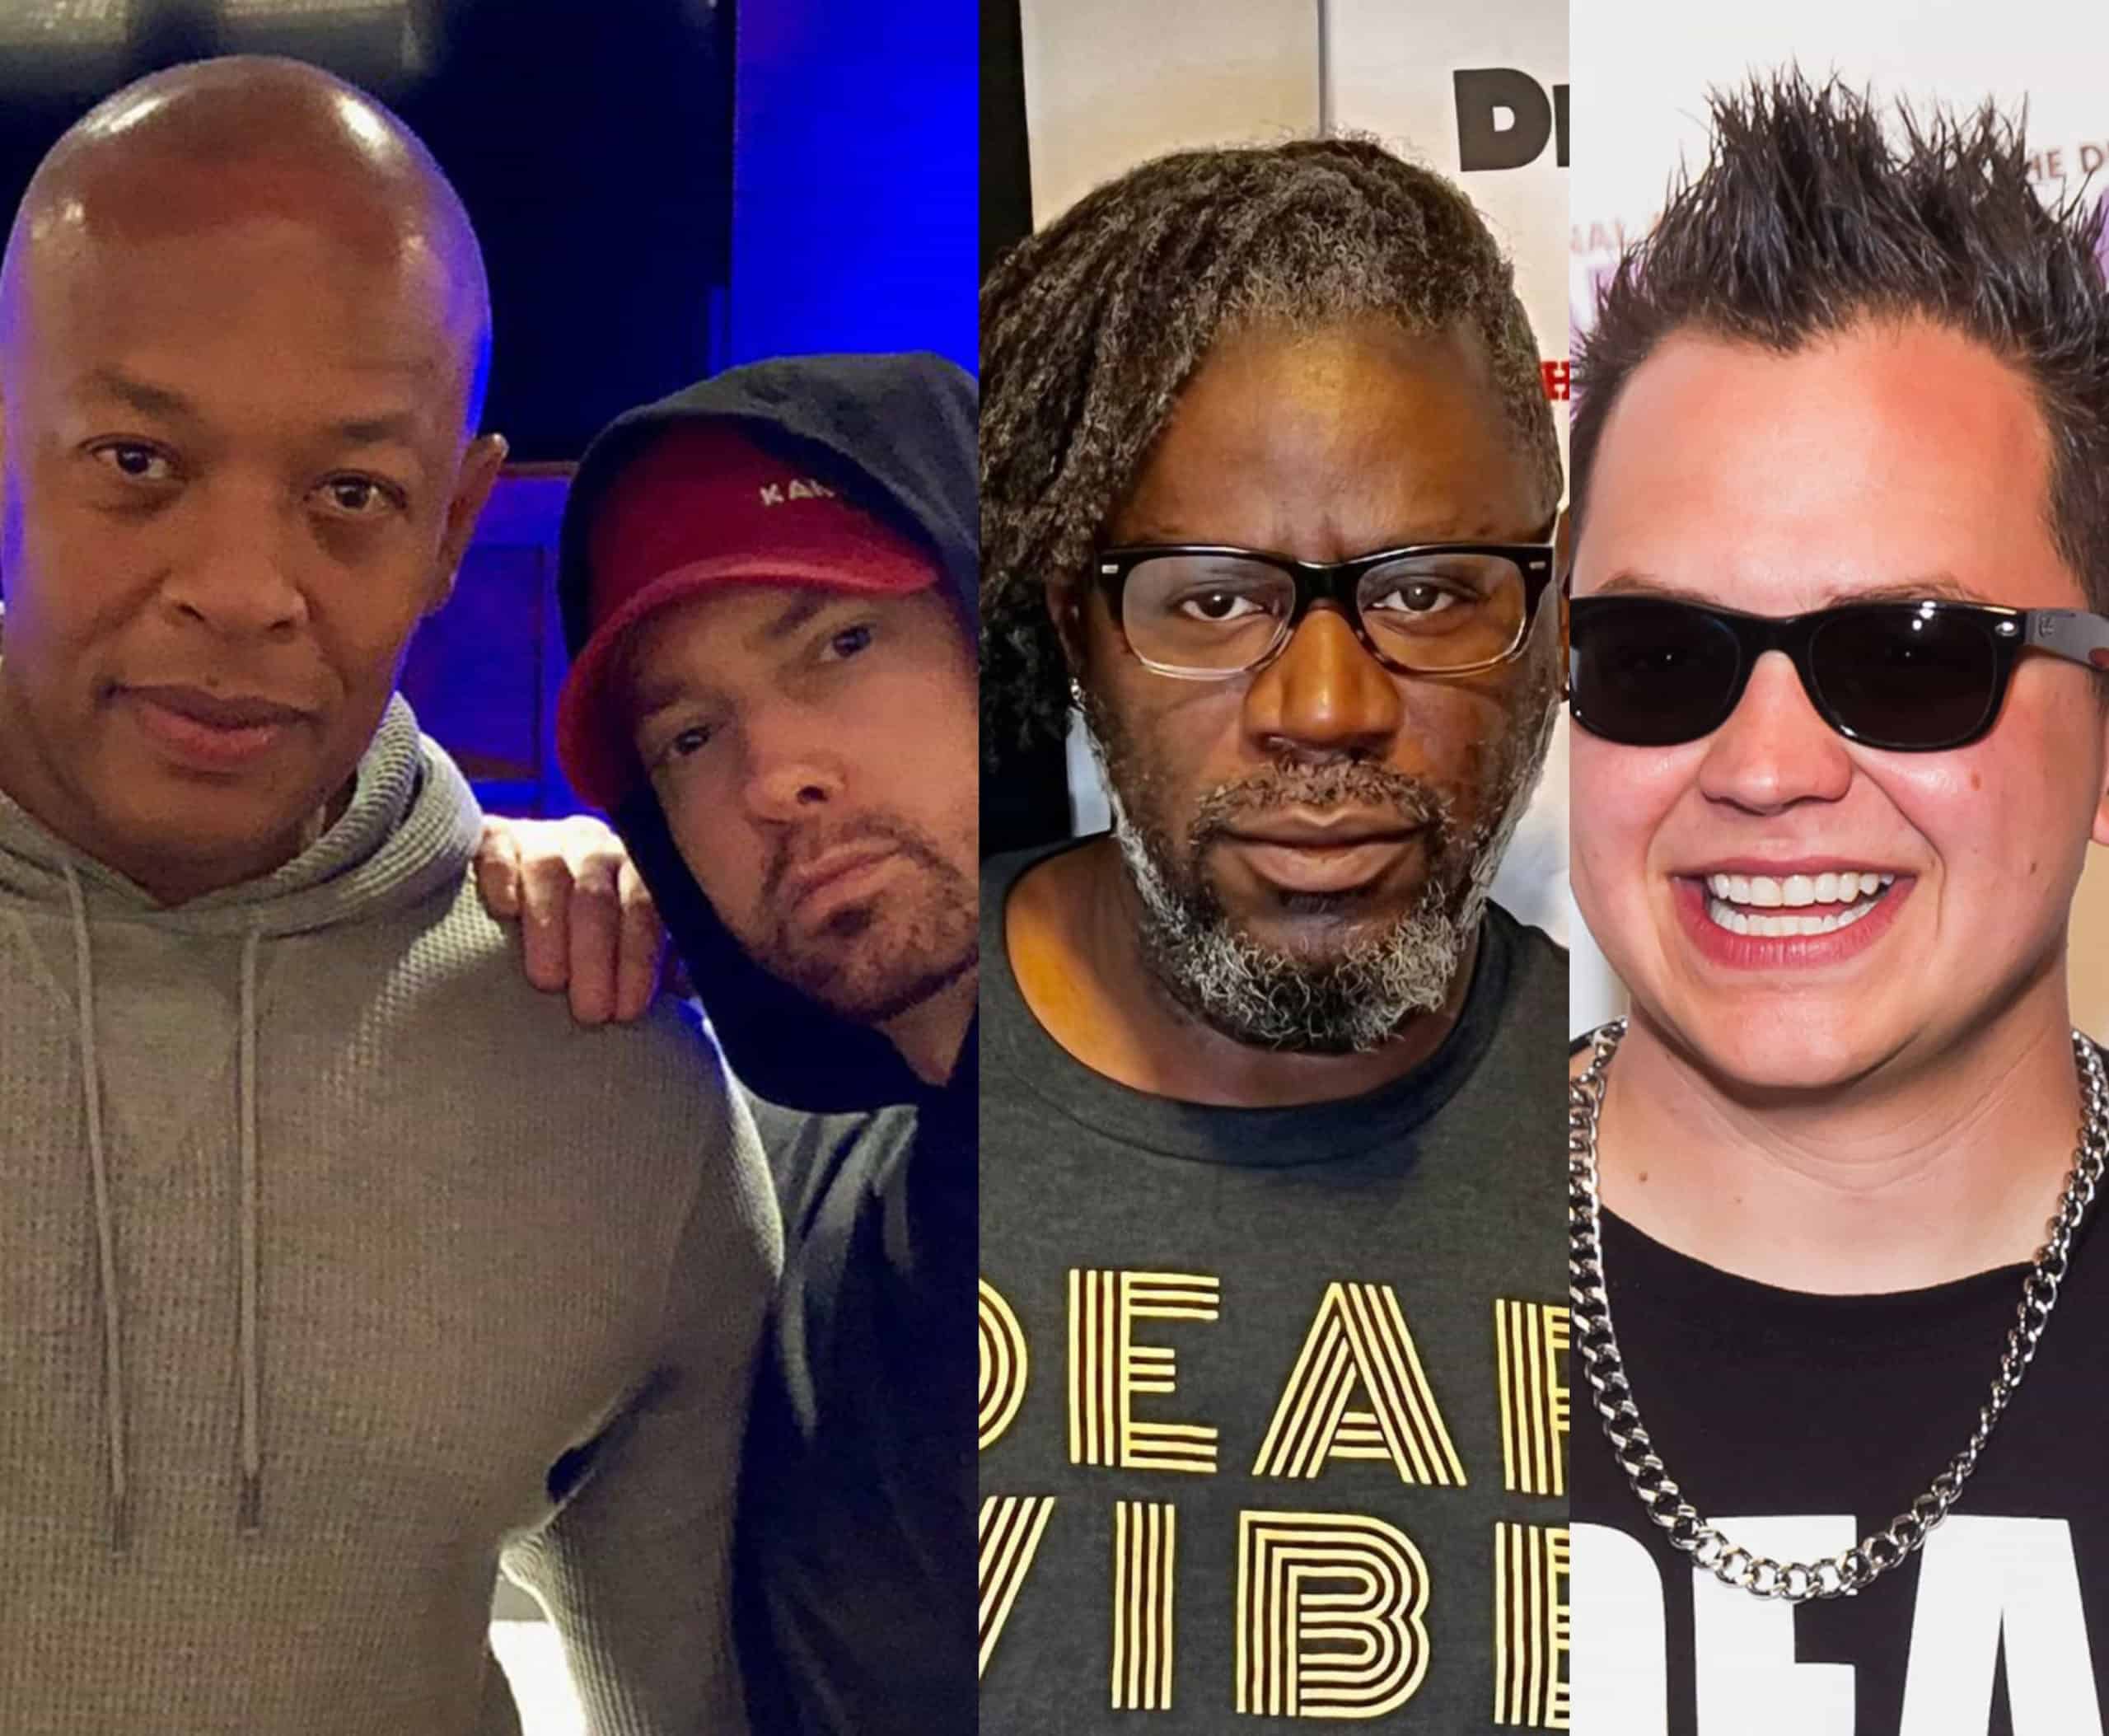 NFL Enlists Two Deaf Rappers To Perform With Dr. Dre, Eminem & Others At Super Bowl Halftime Show